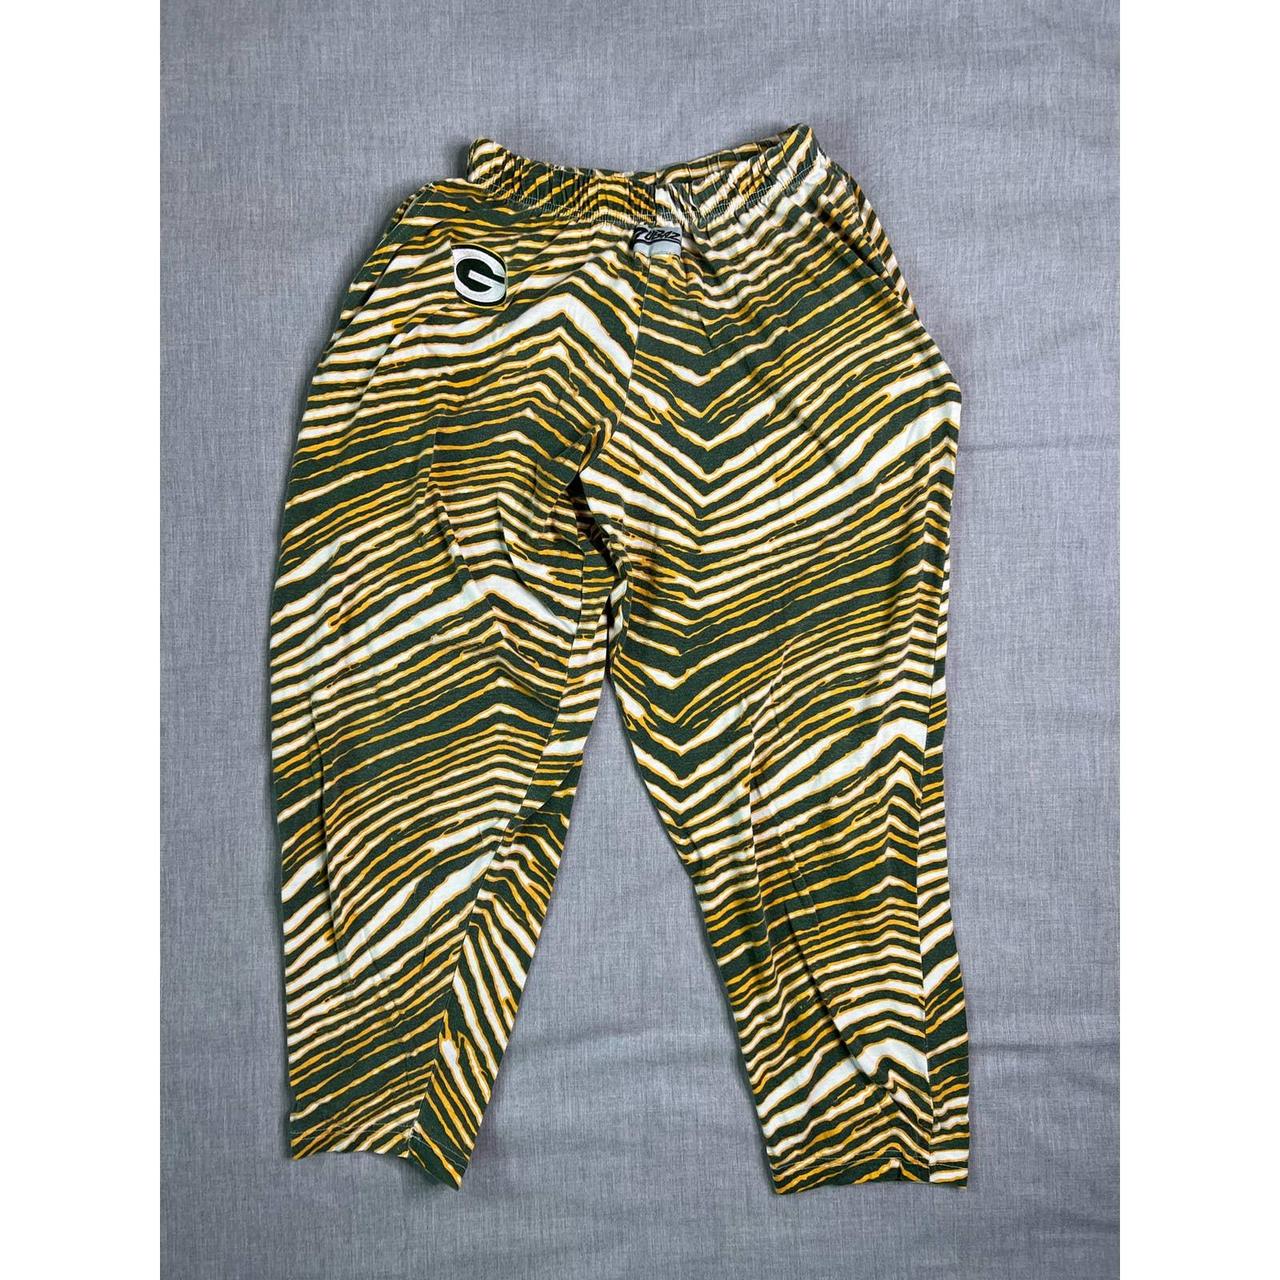 nfl zebra pants